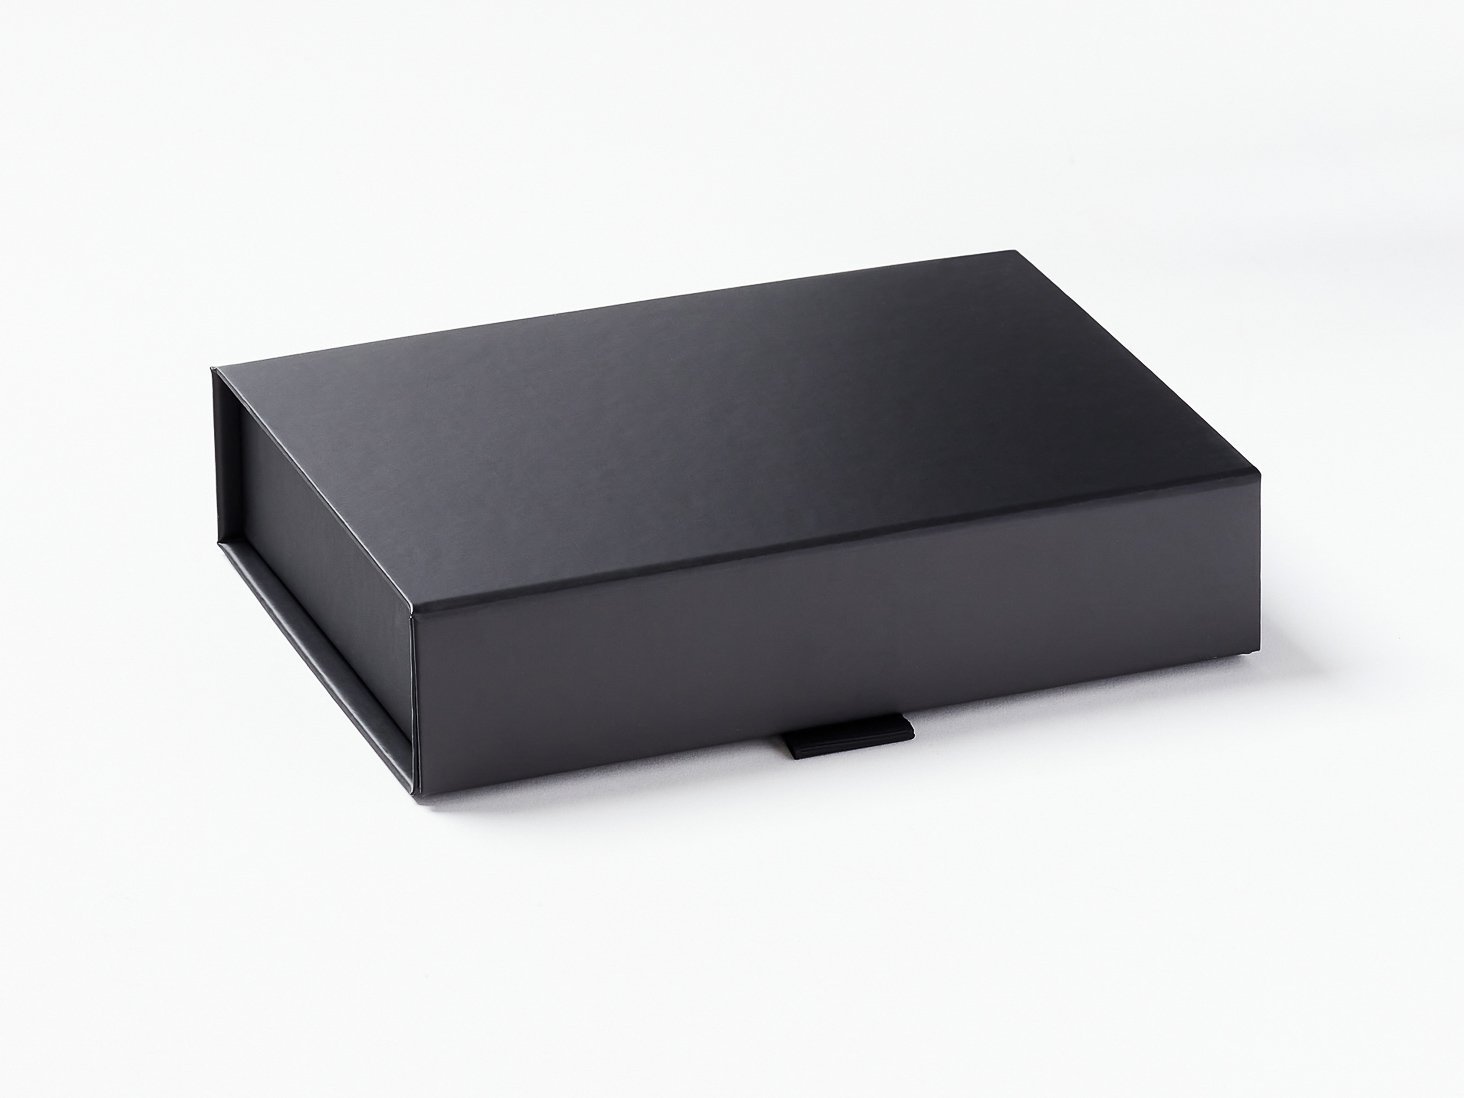 Black A6 Shallow Gift Box from Foldabox USA